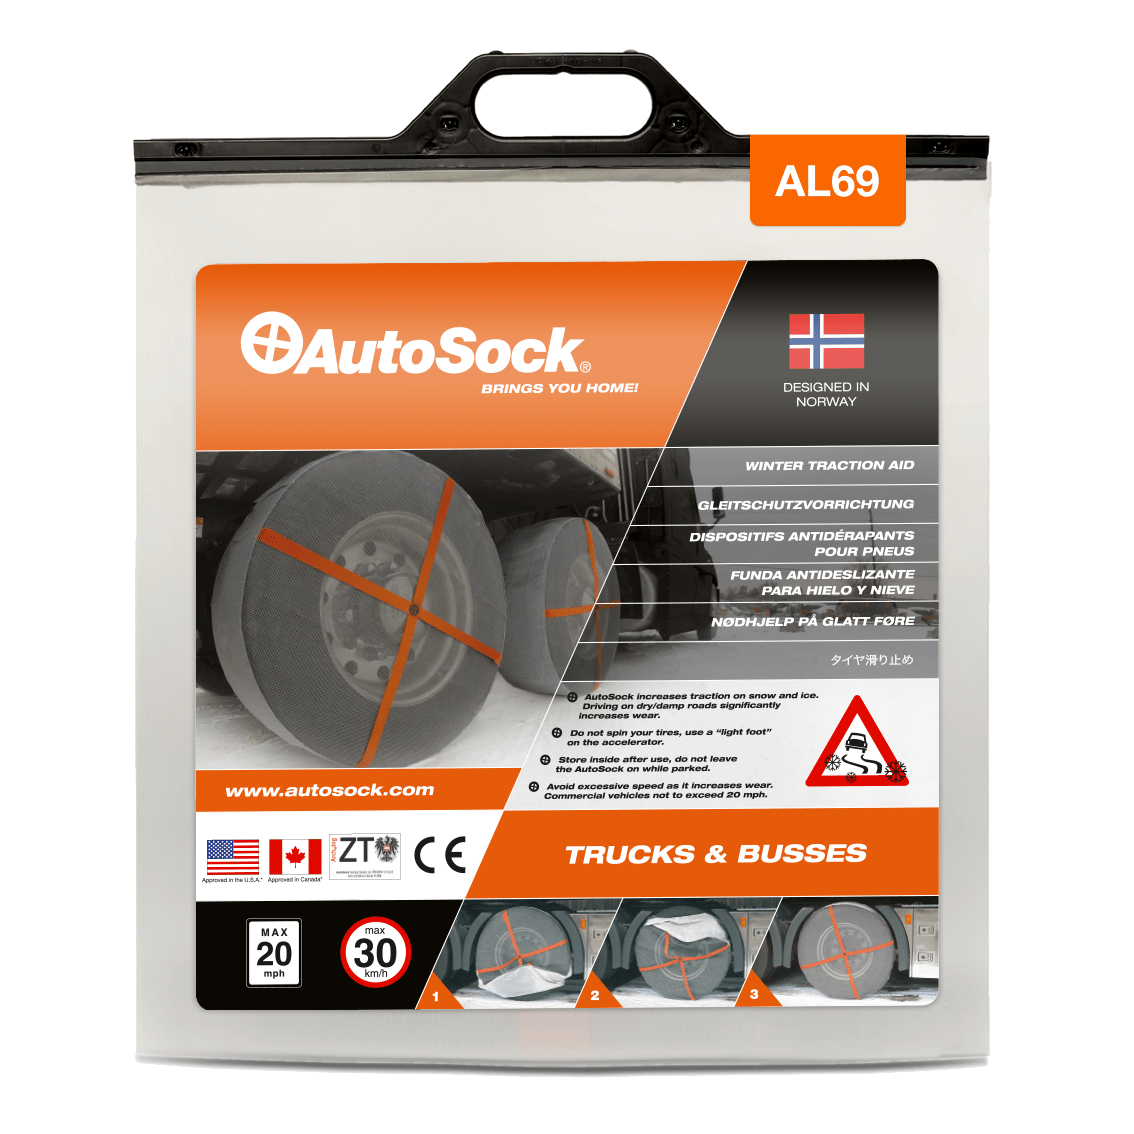 AutoSock AL 69 トラック用オートソックの製品パッケージ（正面図）